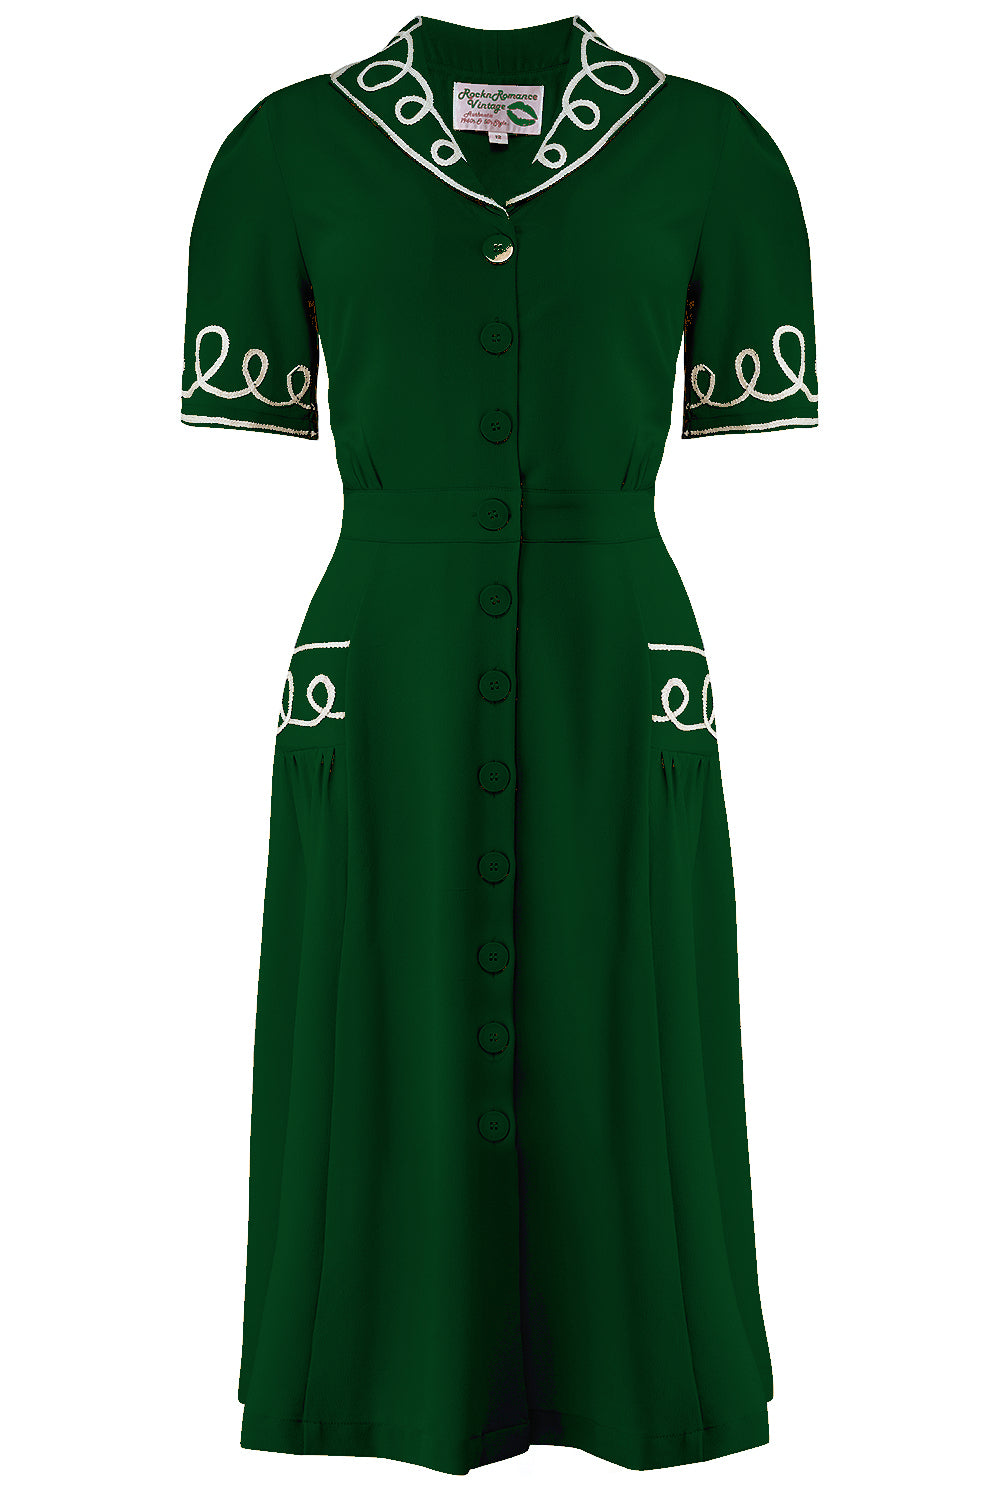 The "Loopy-Lou" Shirtwaister Dress in Green with Contrast RicRac, True 1950s Vintage Style - CC41, Goodwood Revival, Twinwood Festival, Viva Las Vegas Rockabilly Weekend Rock n Romance Rock n Romance